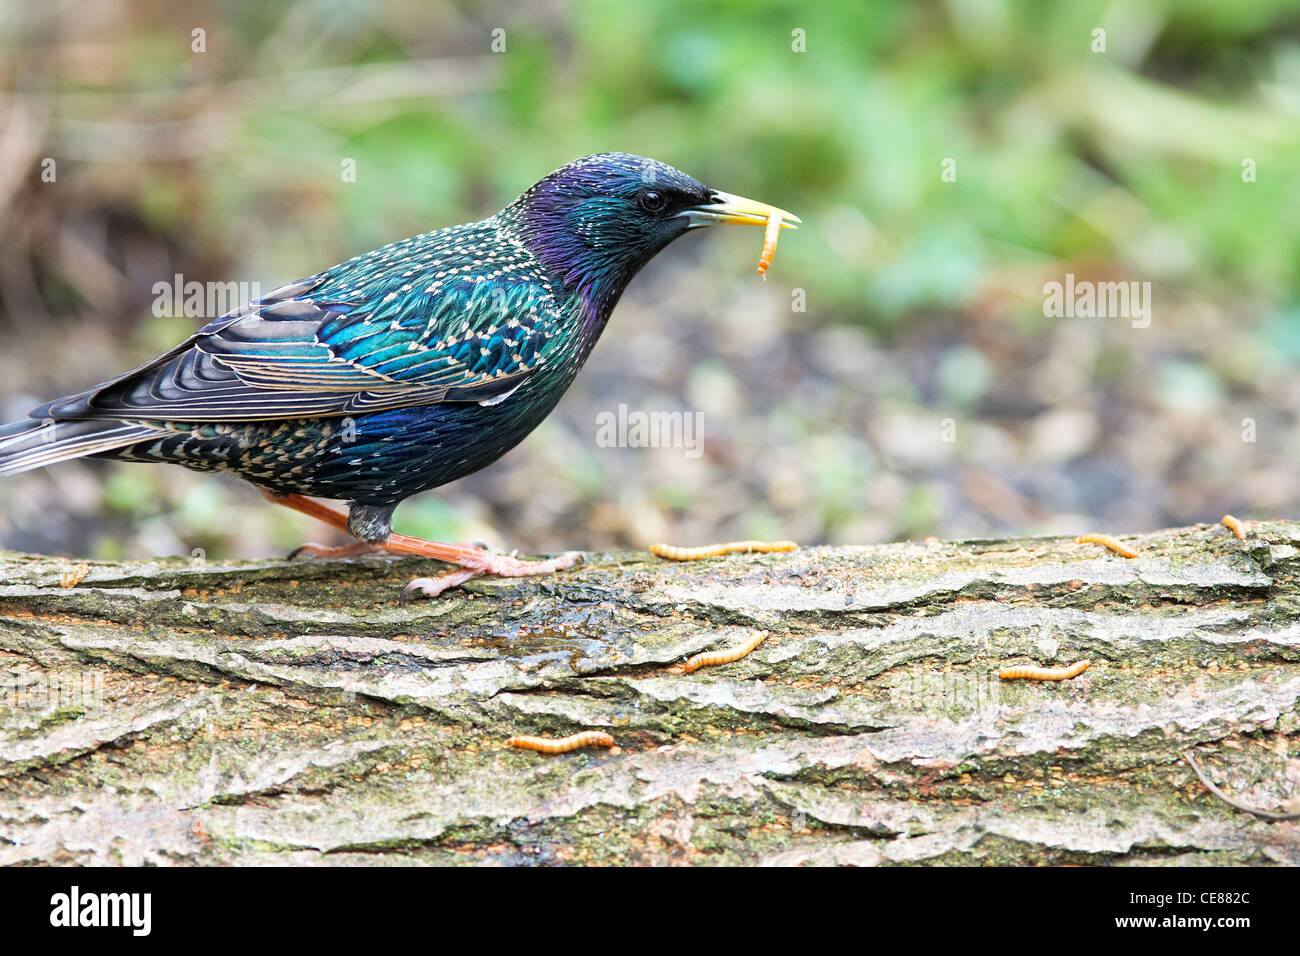 Common starling - Sturnus vulgaris showing colourful spring/summer plumage Stock Photo